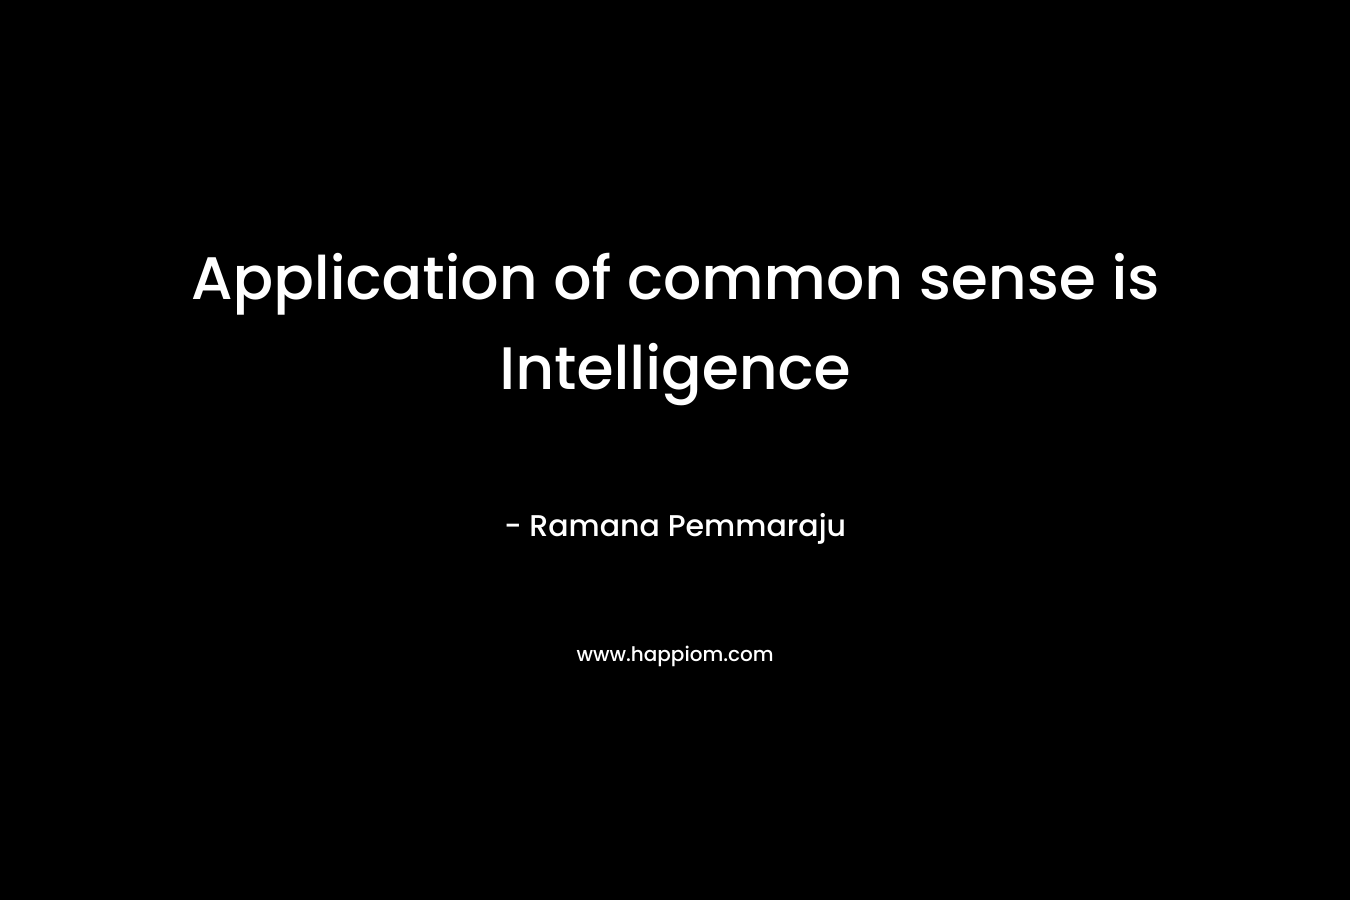 Application of common sense is Intelligence